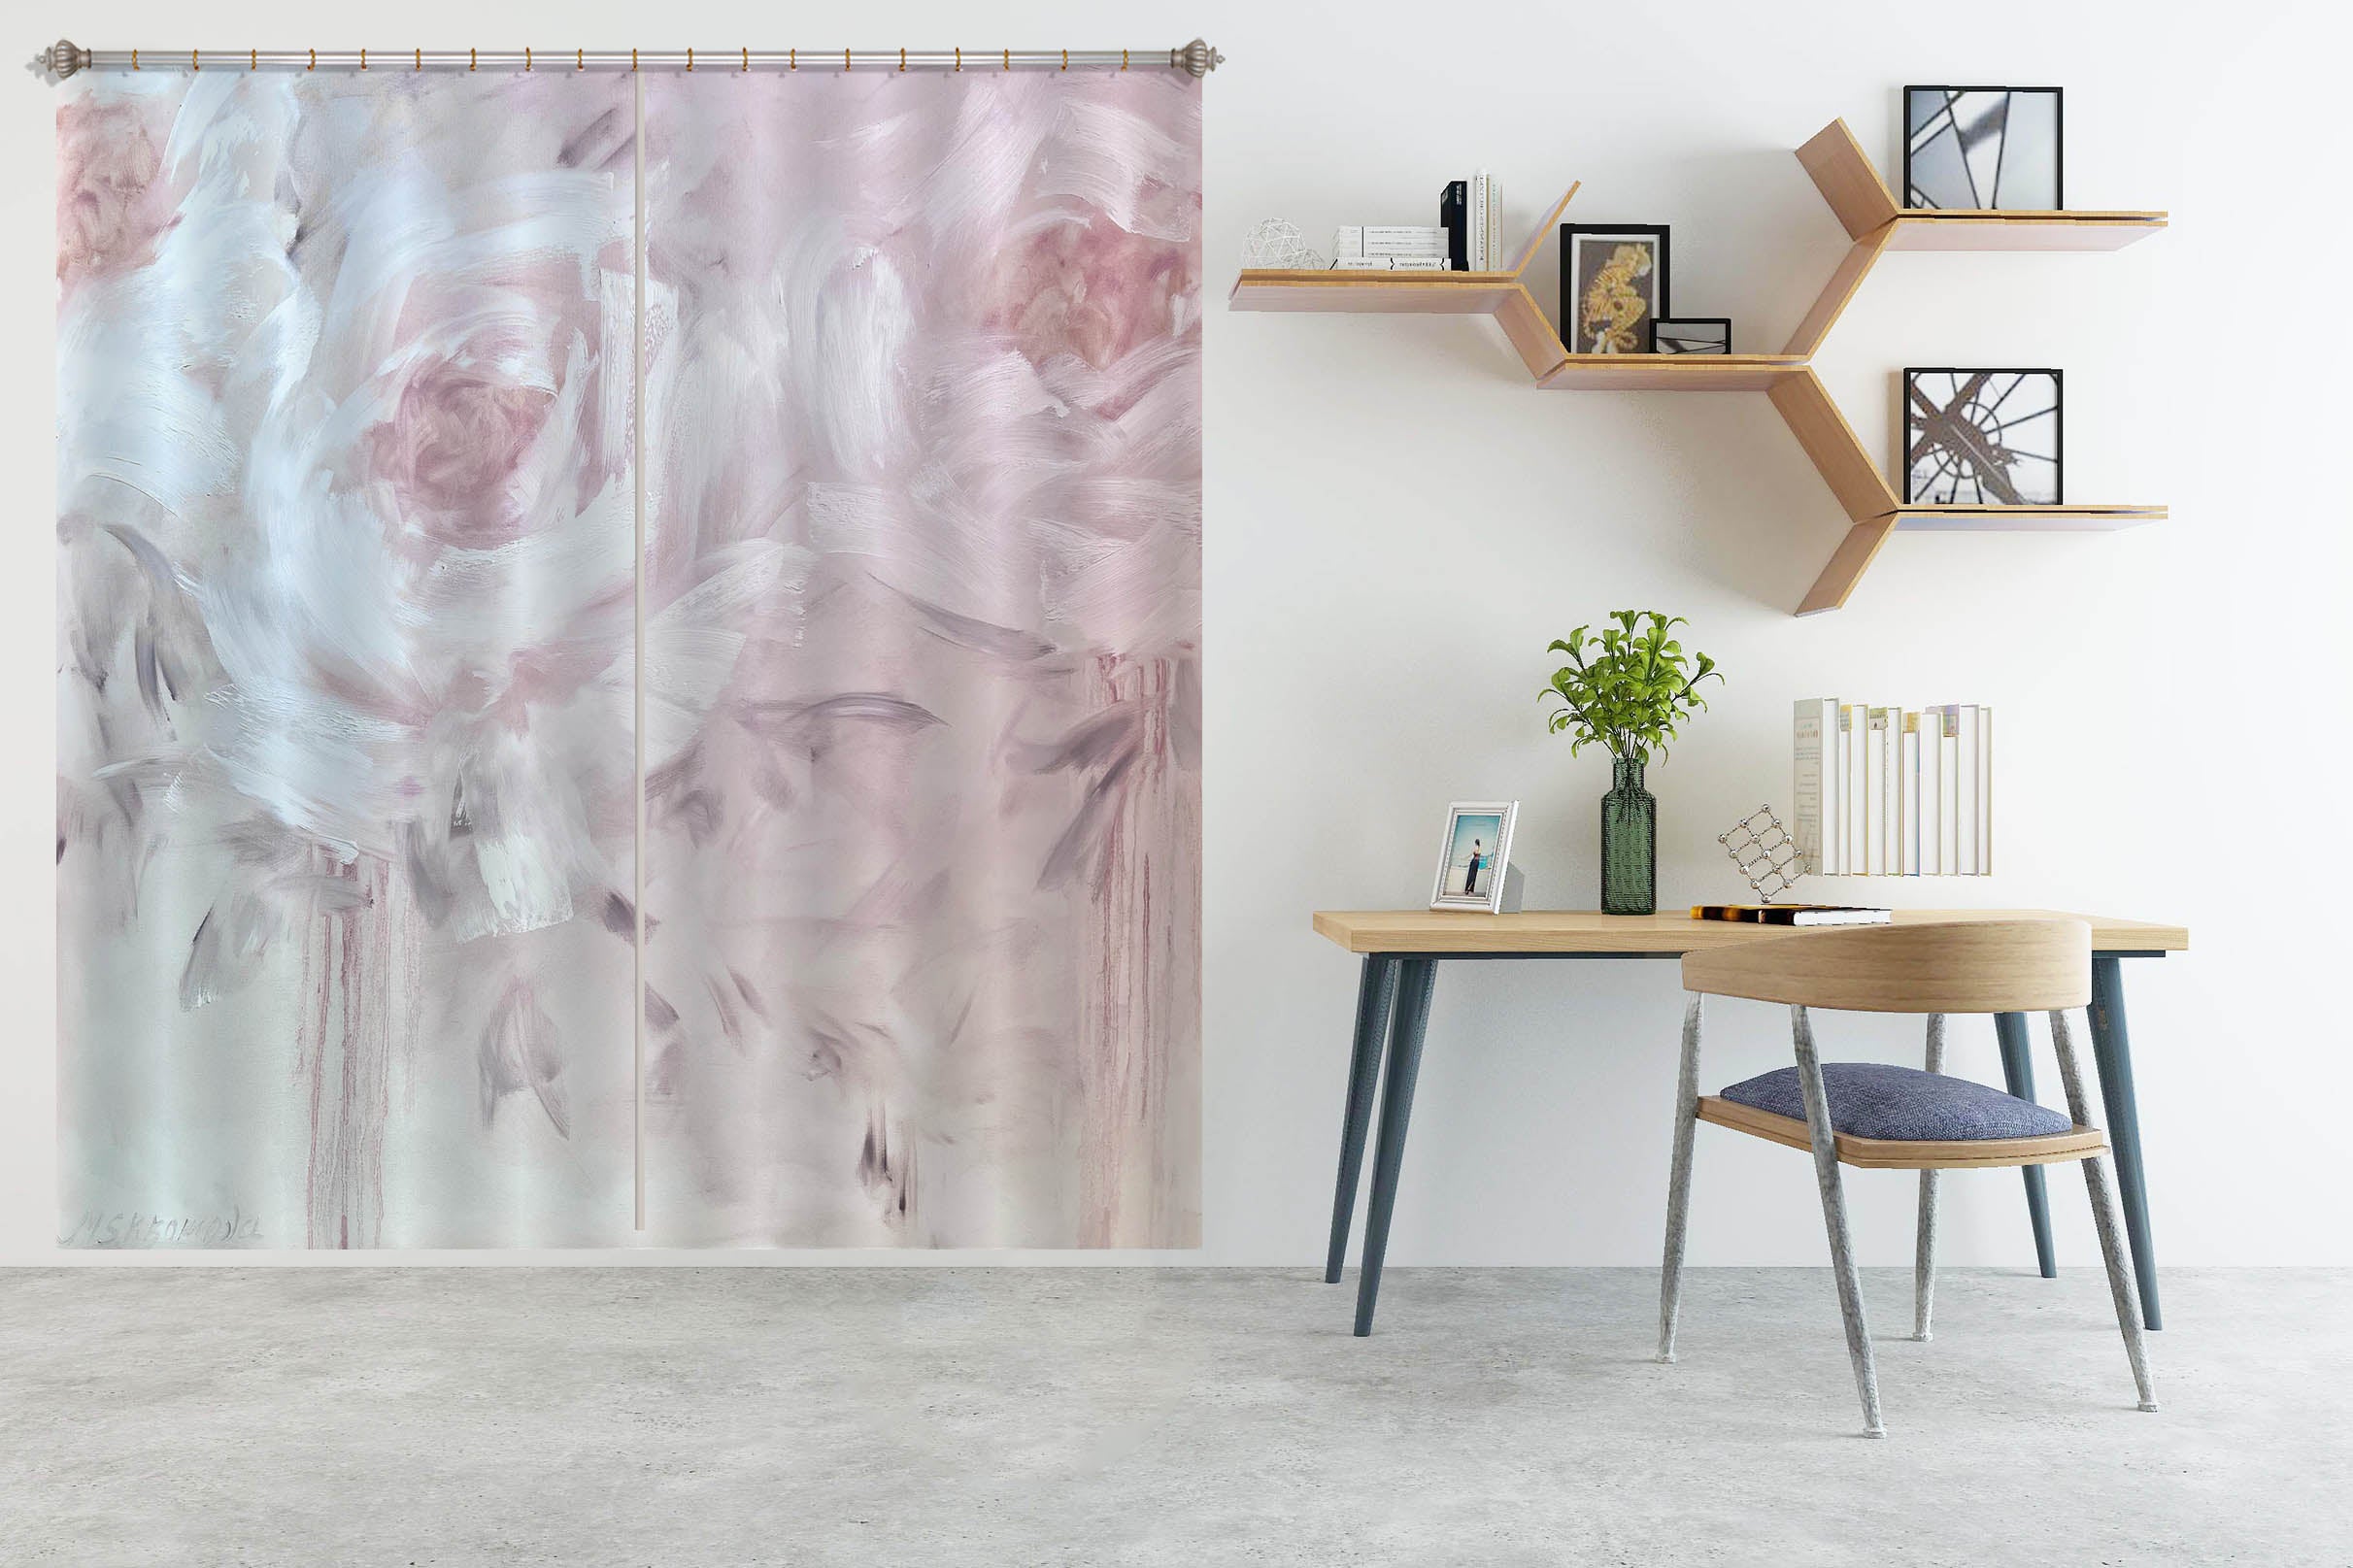 3D Pink Flower 3030 Skromova Marina Curtain Curtains Drapes